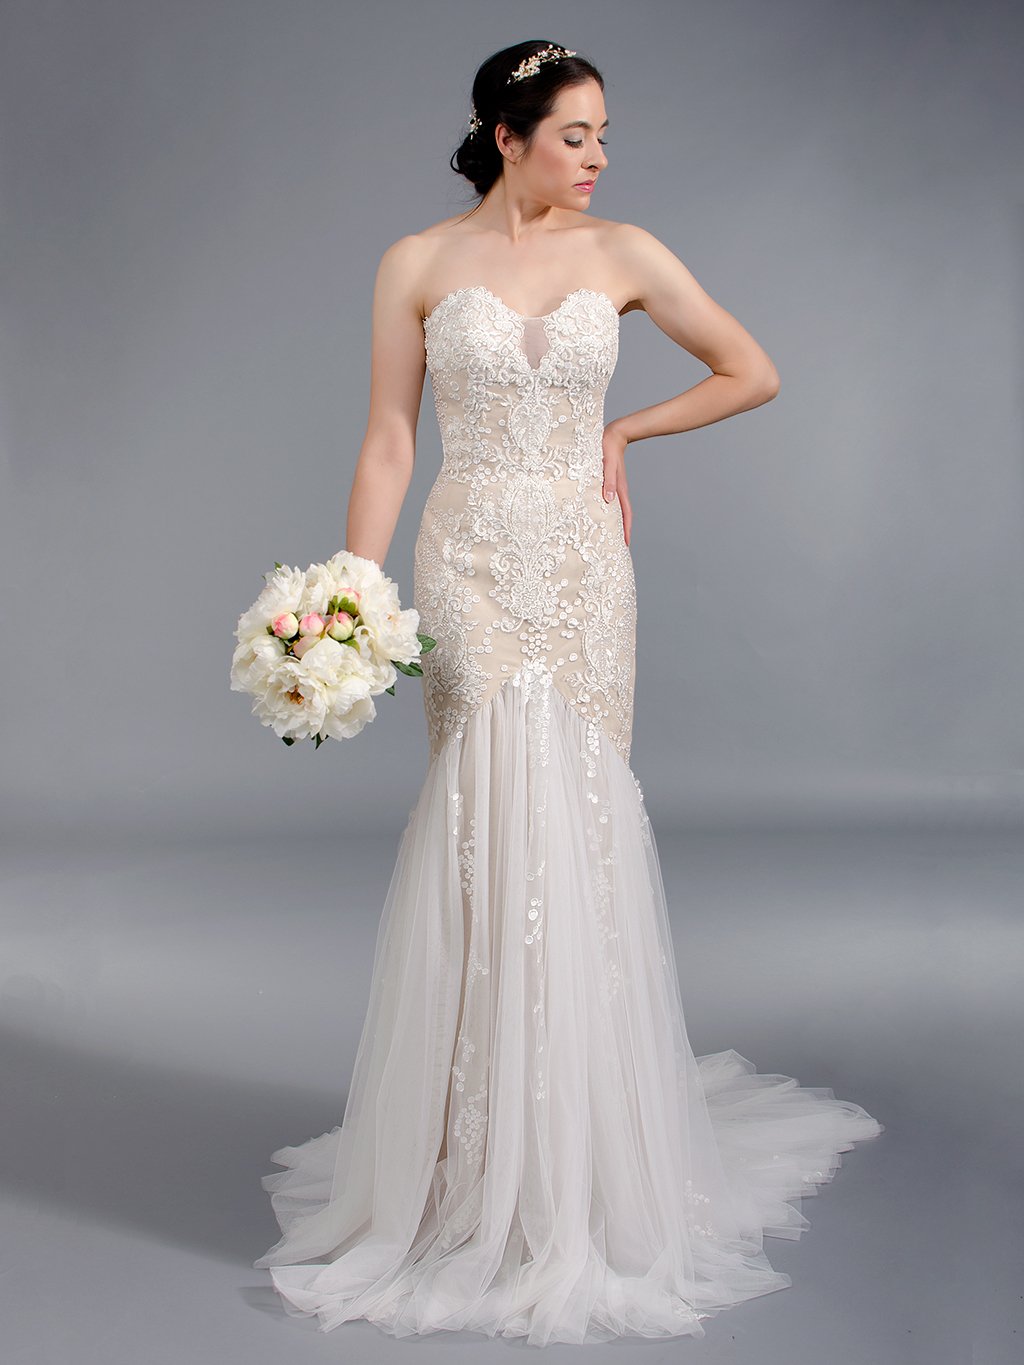 Strapless mermaid wedding dress 4046